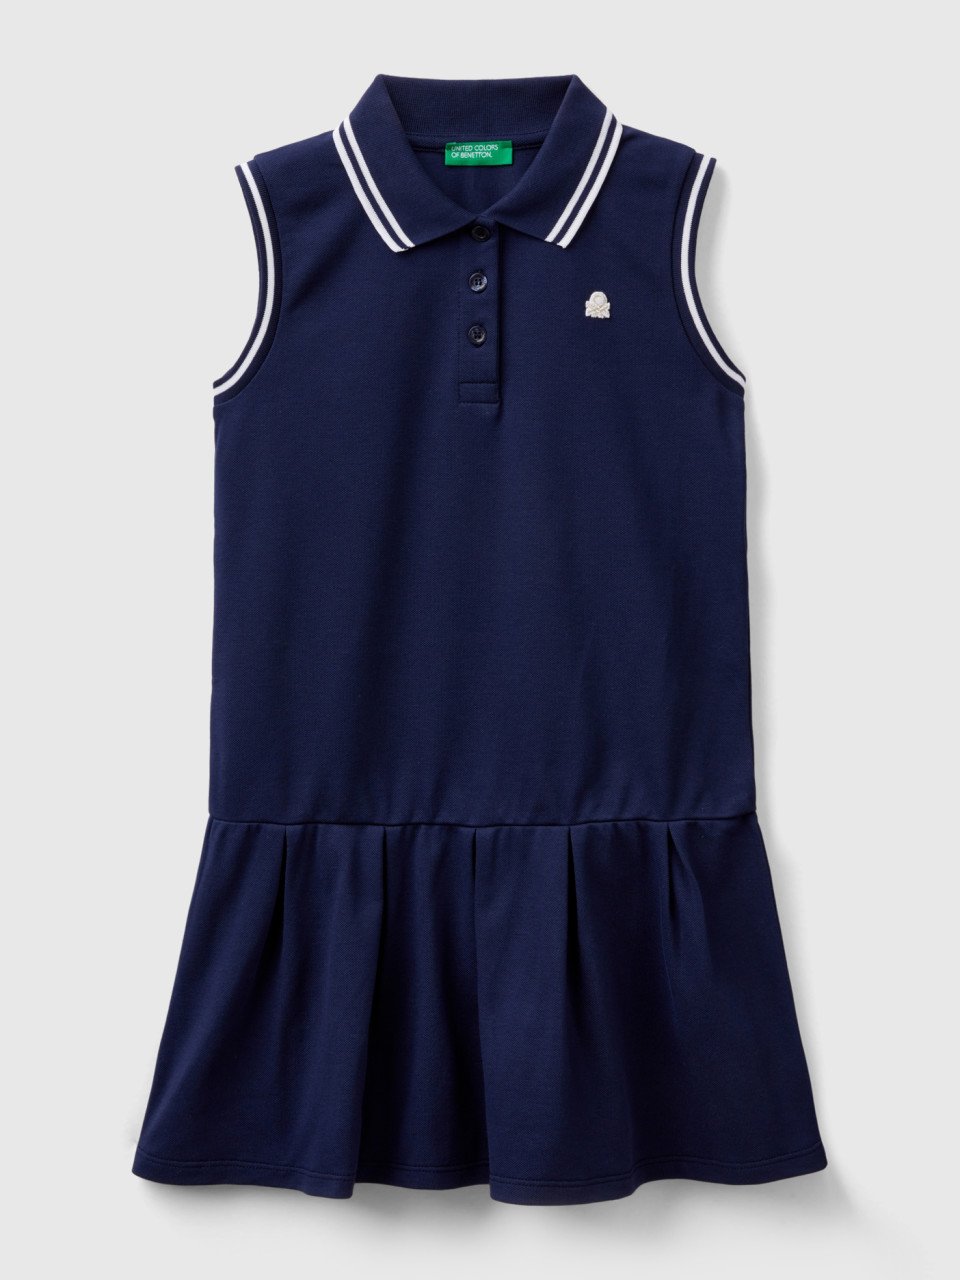 Benetton, Polo-style Dress, Dark Blue, Kids